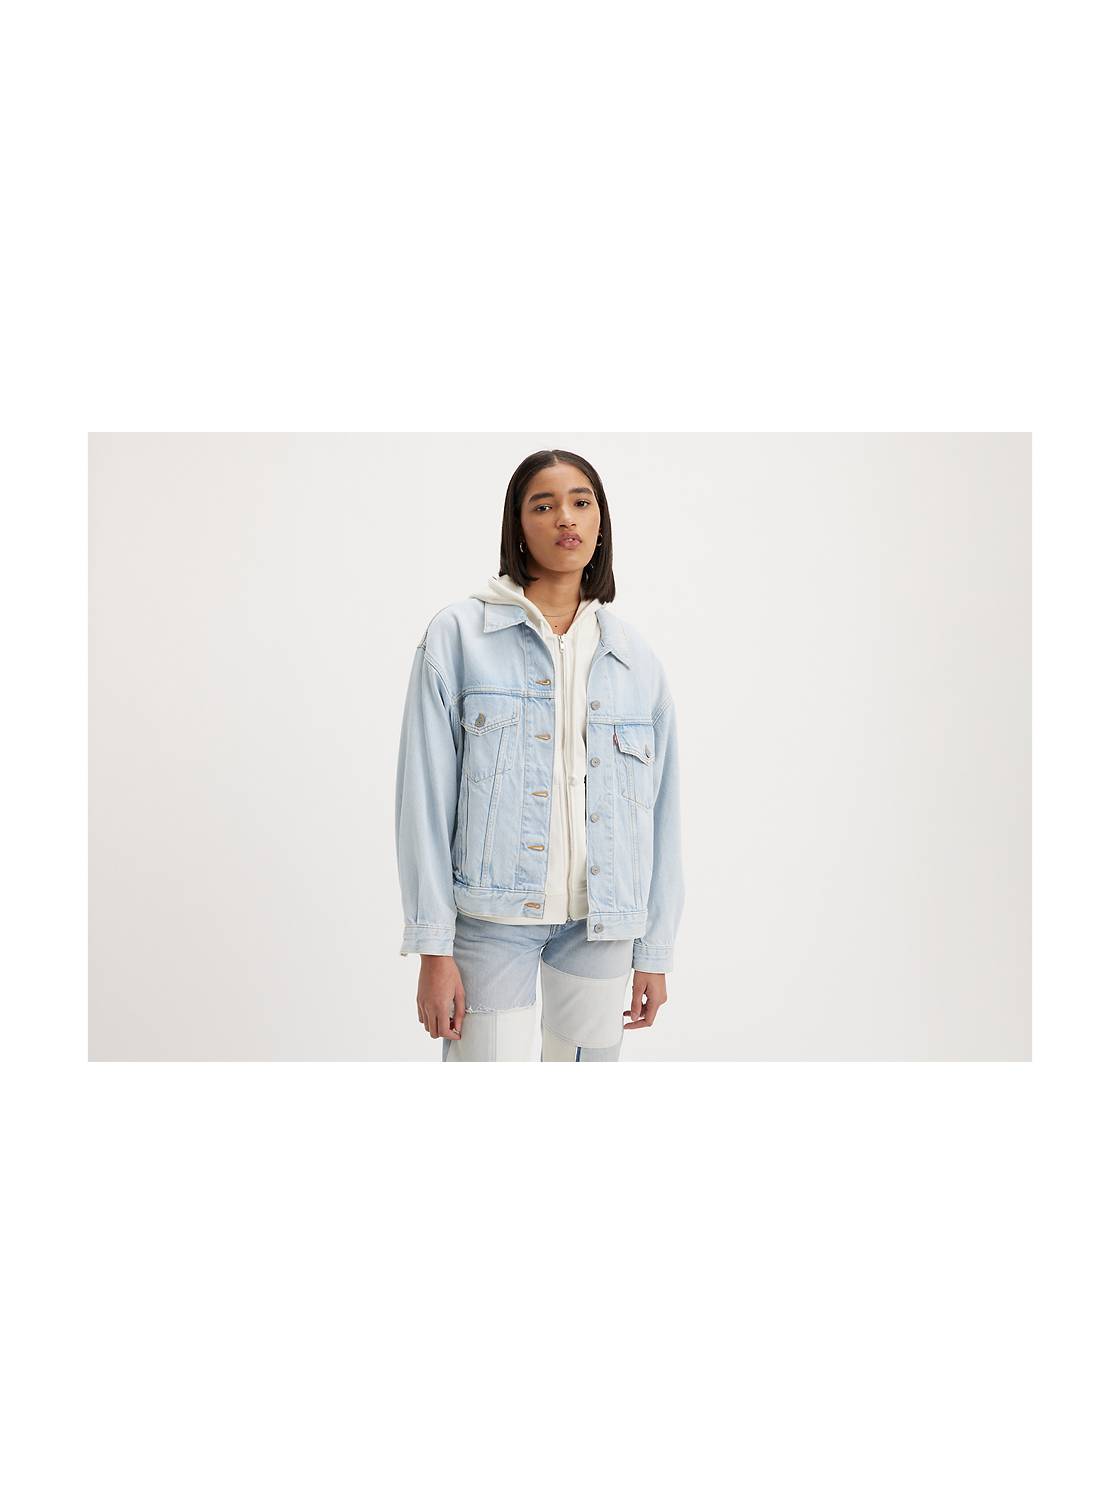 Coloured jean jacket, Contemporaine, Women's Denim Jackets Fall/Winter  2019